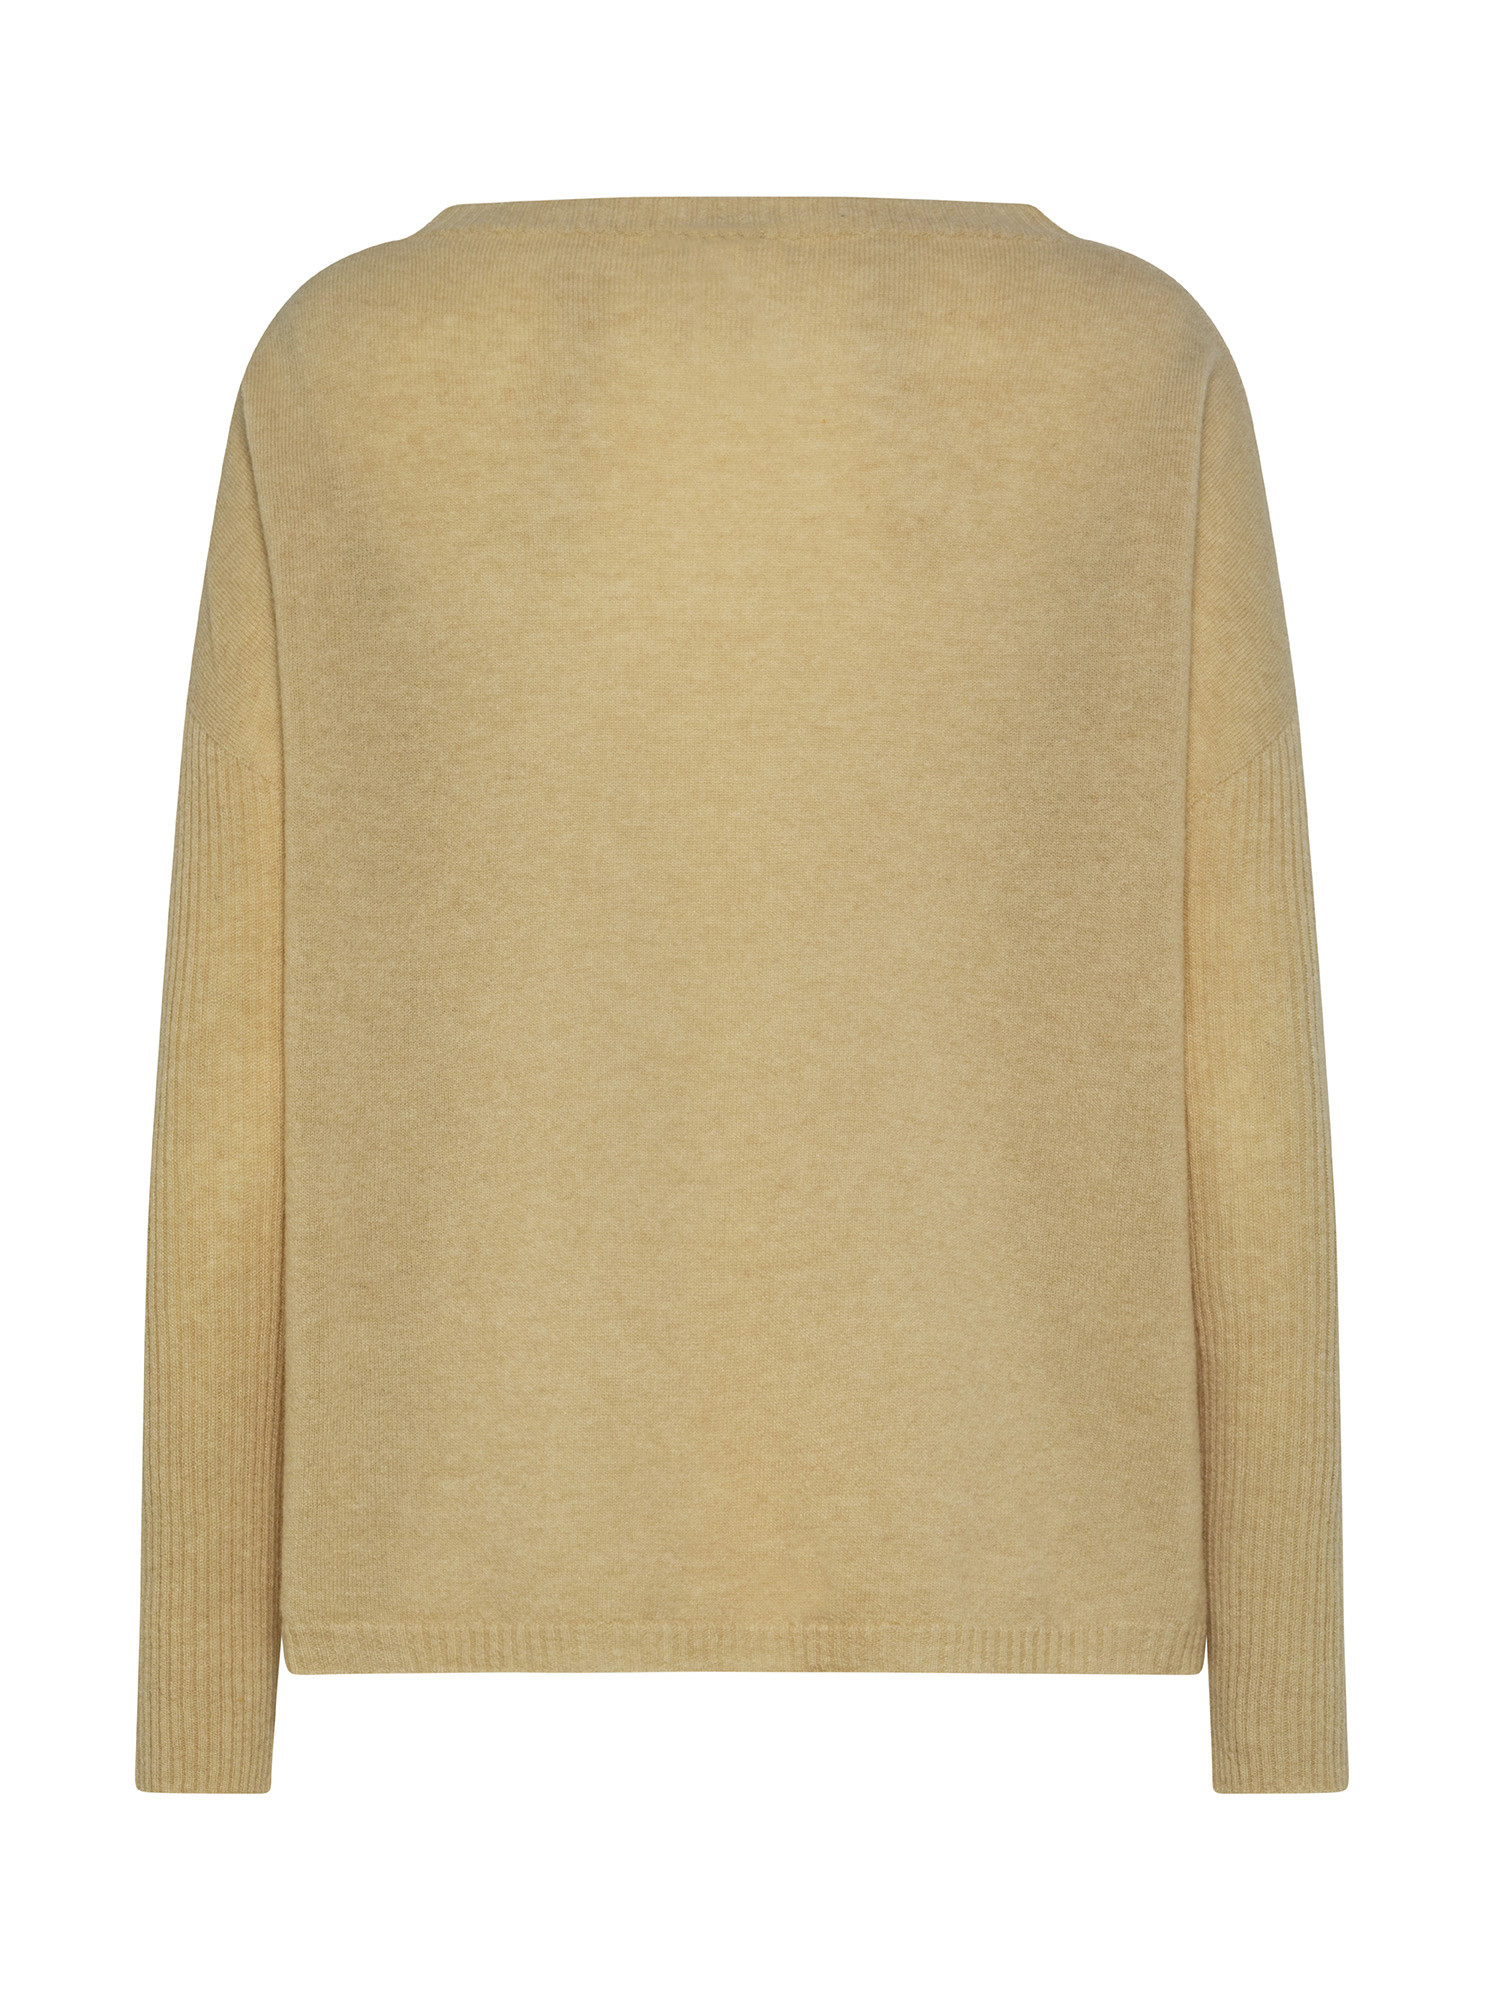 K Collection - Crewneck sweater, Beige, large image number 1